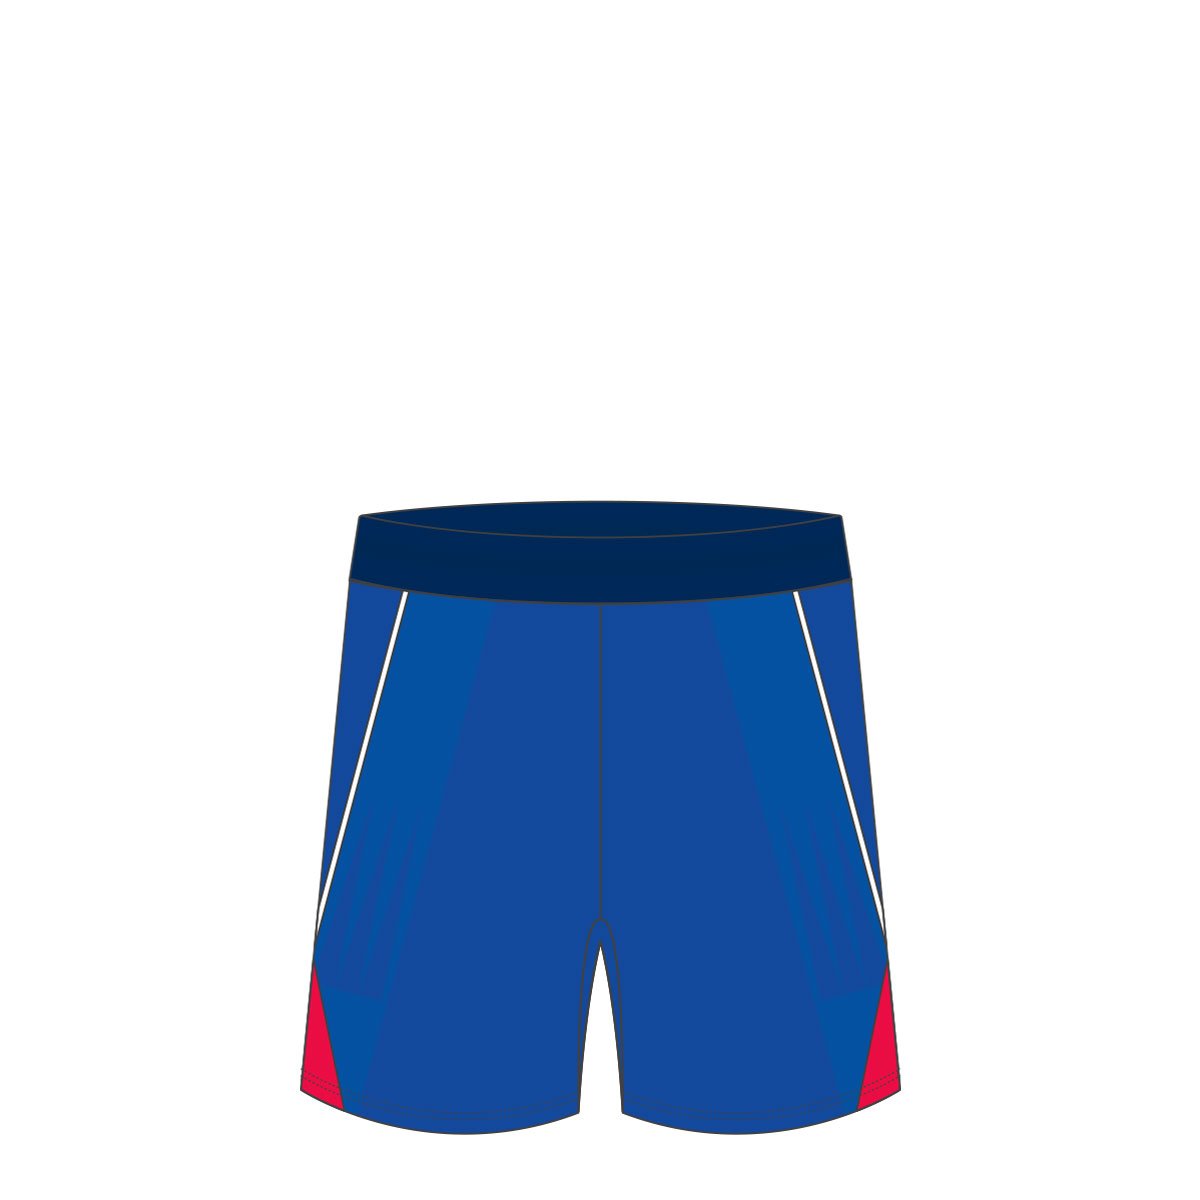 2021 Lakapi Samoa Mens Gym Short - Blue